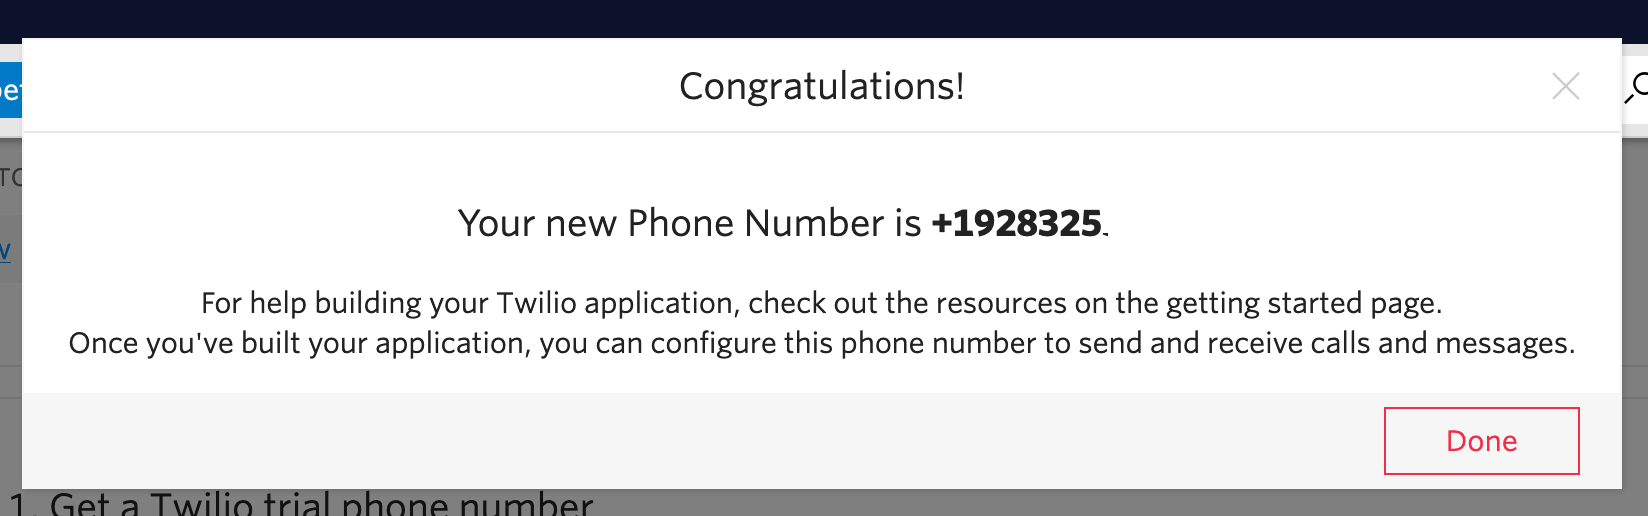 Successful phone number